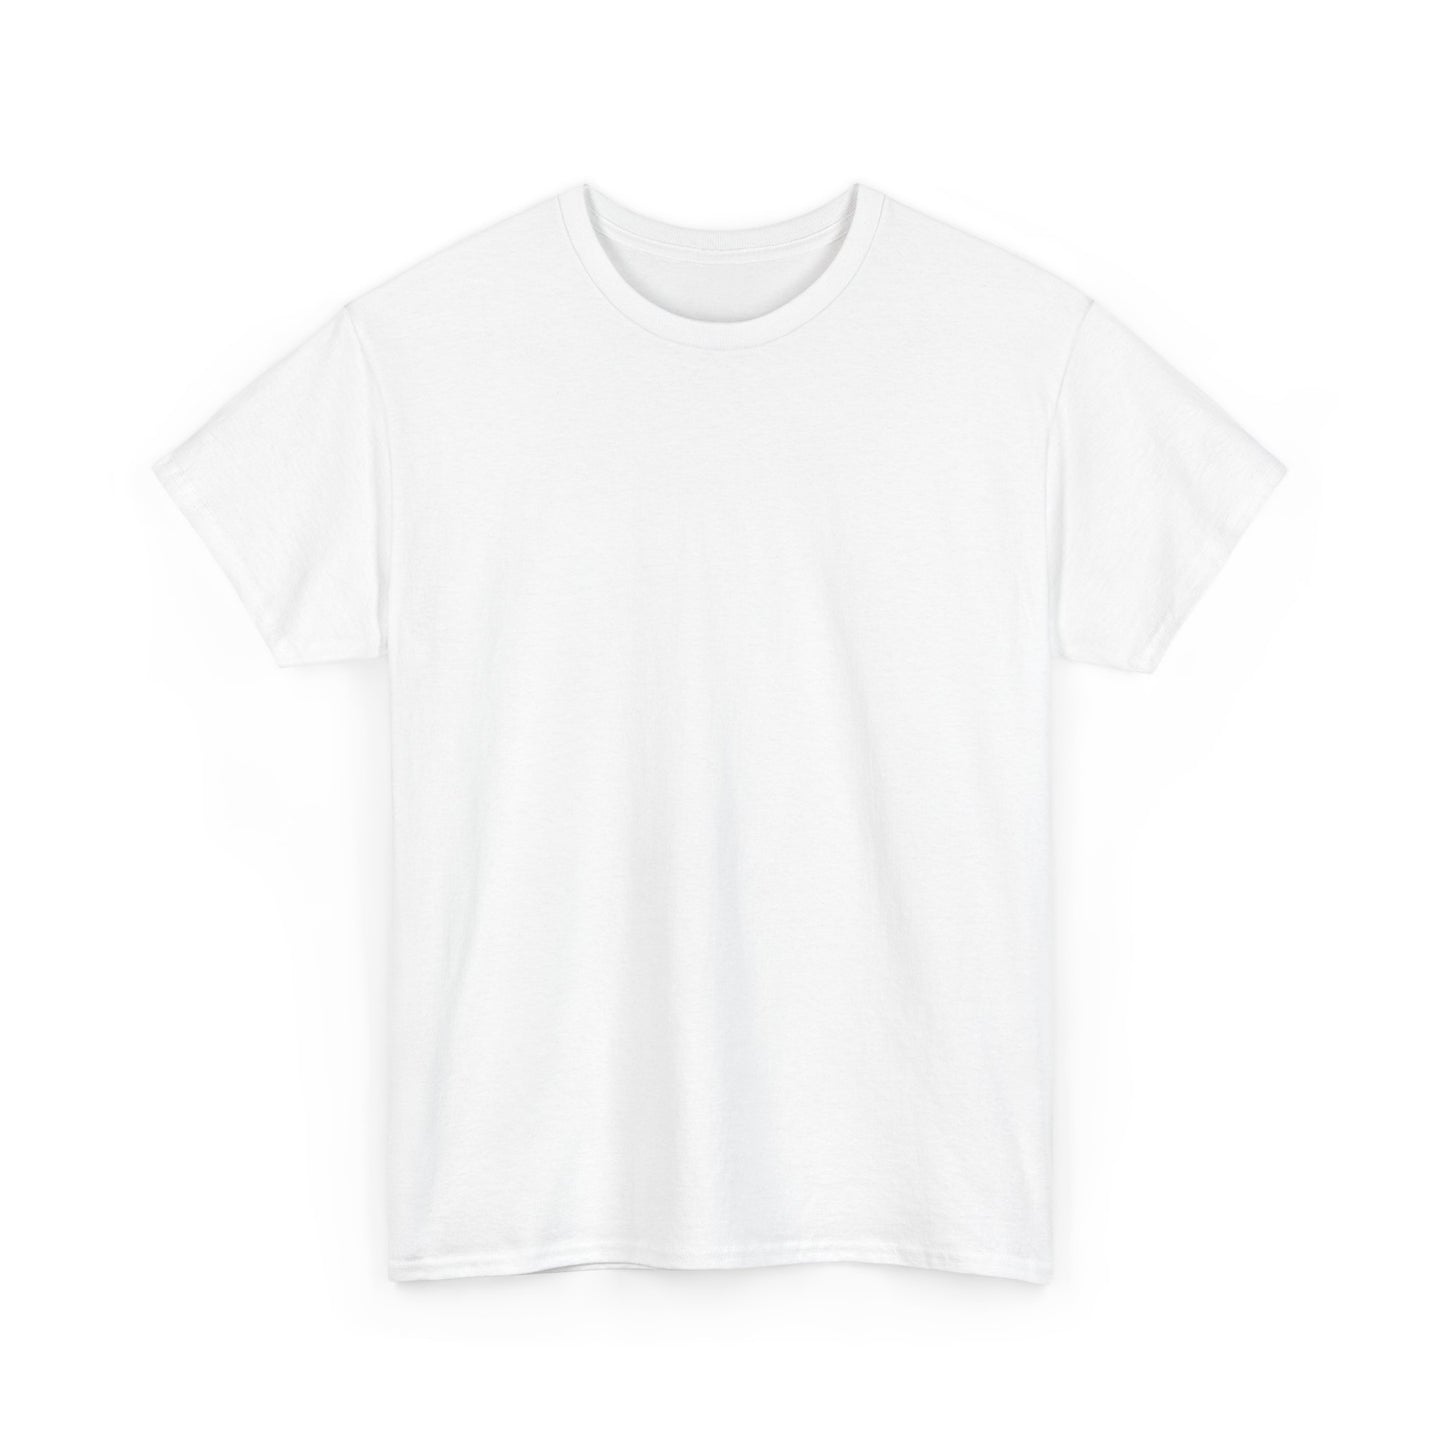 Unisex B.A.S.I.C "P&W 3" T Shirt